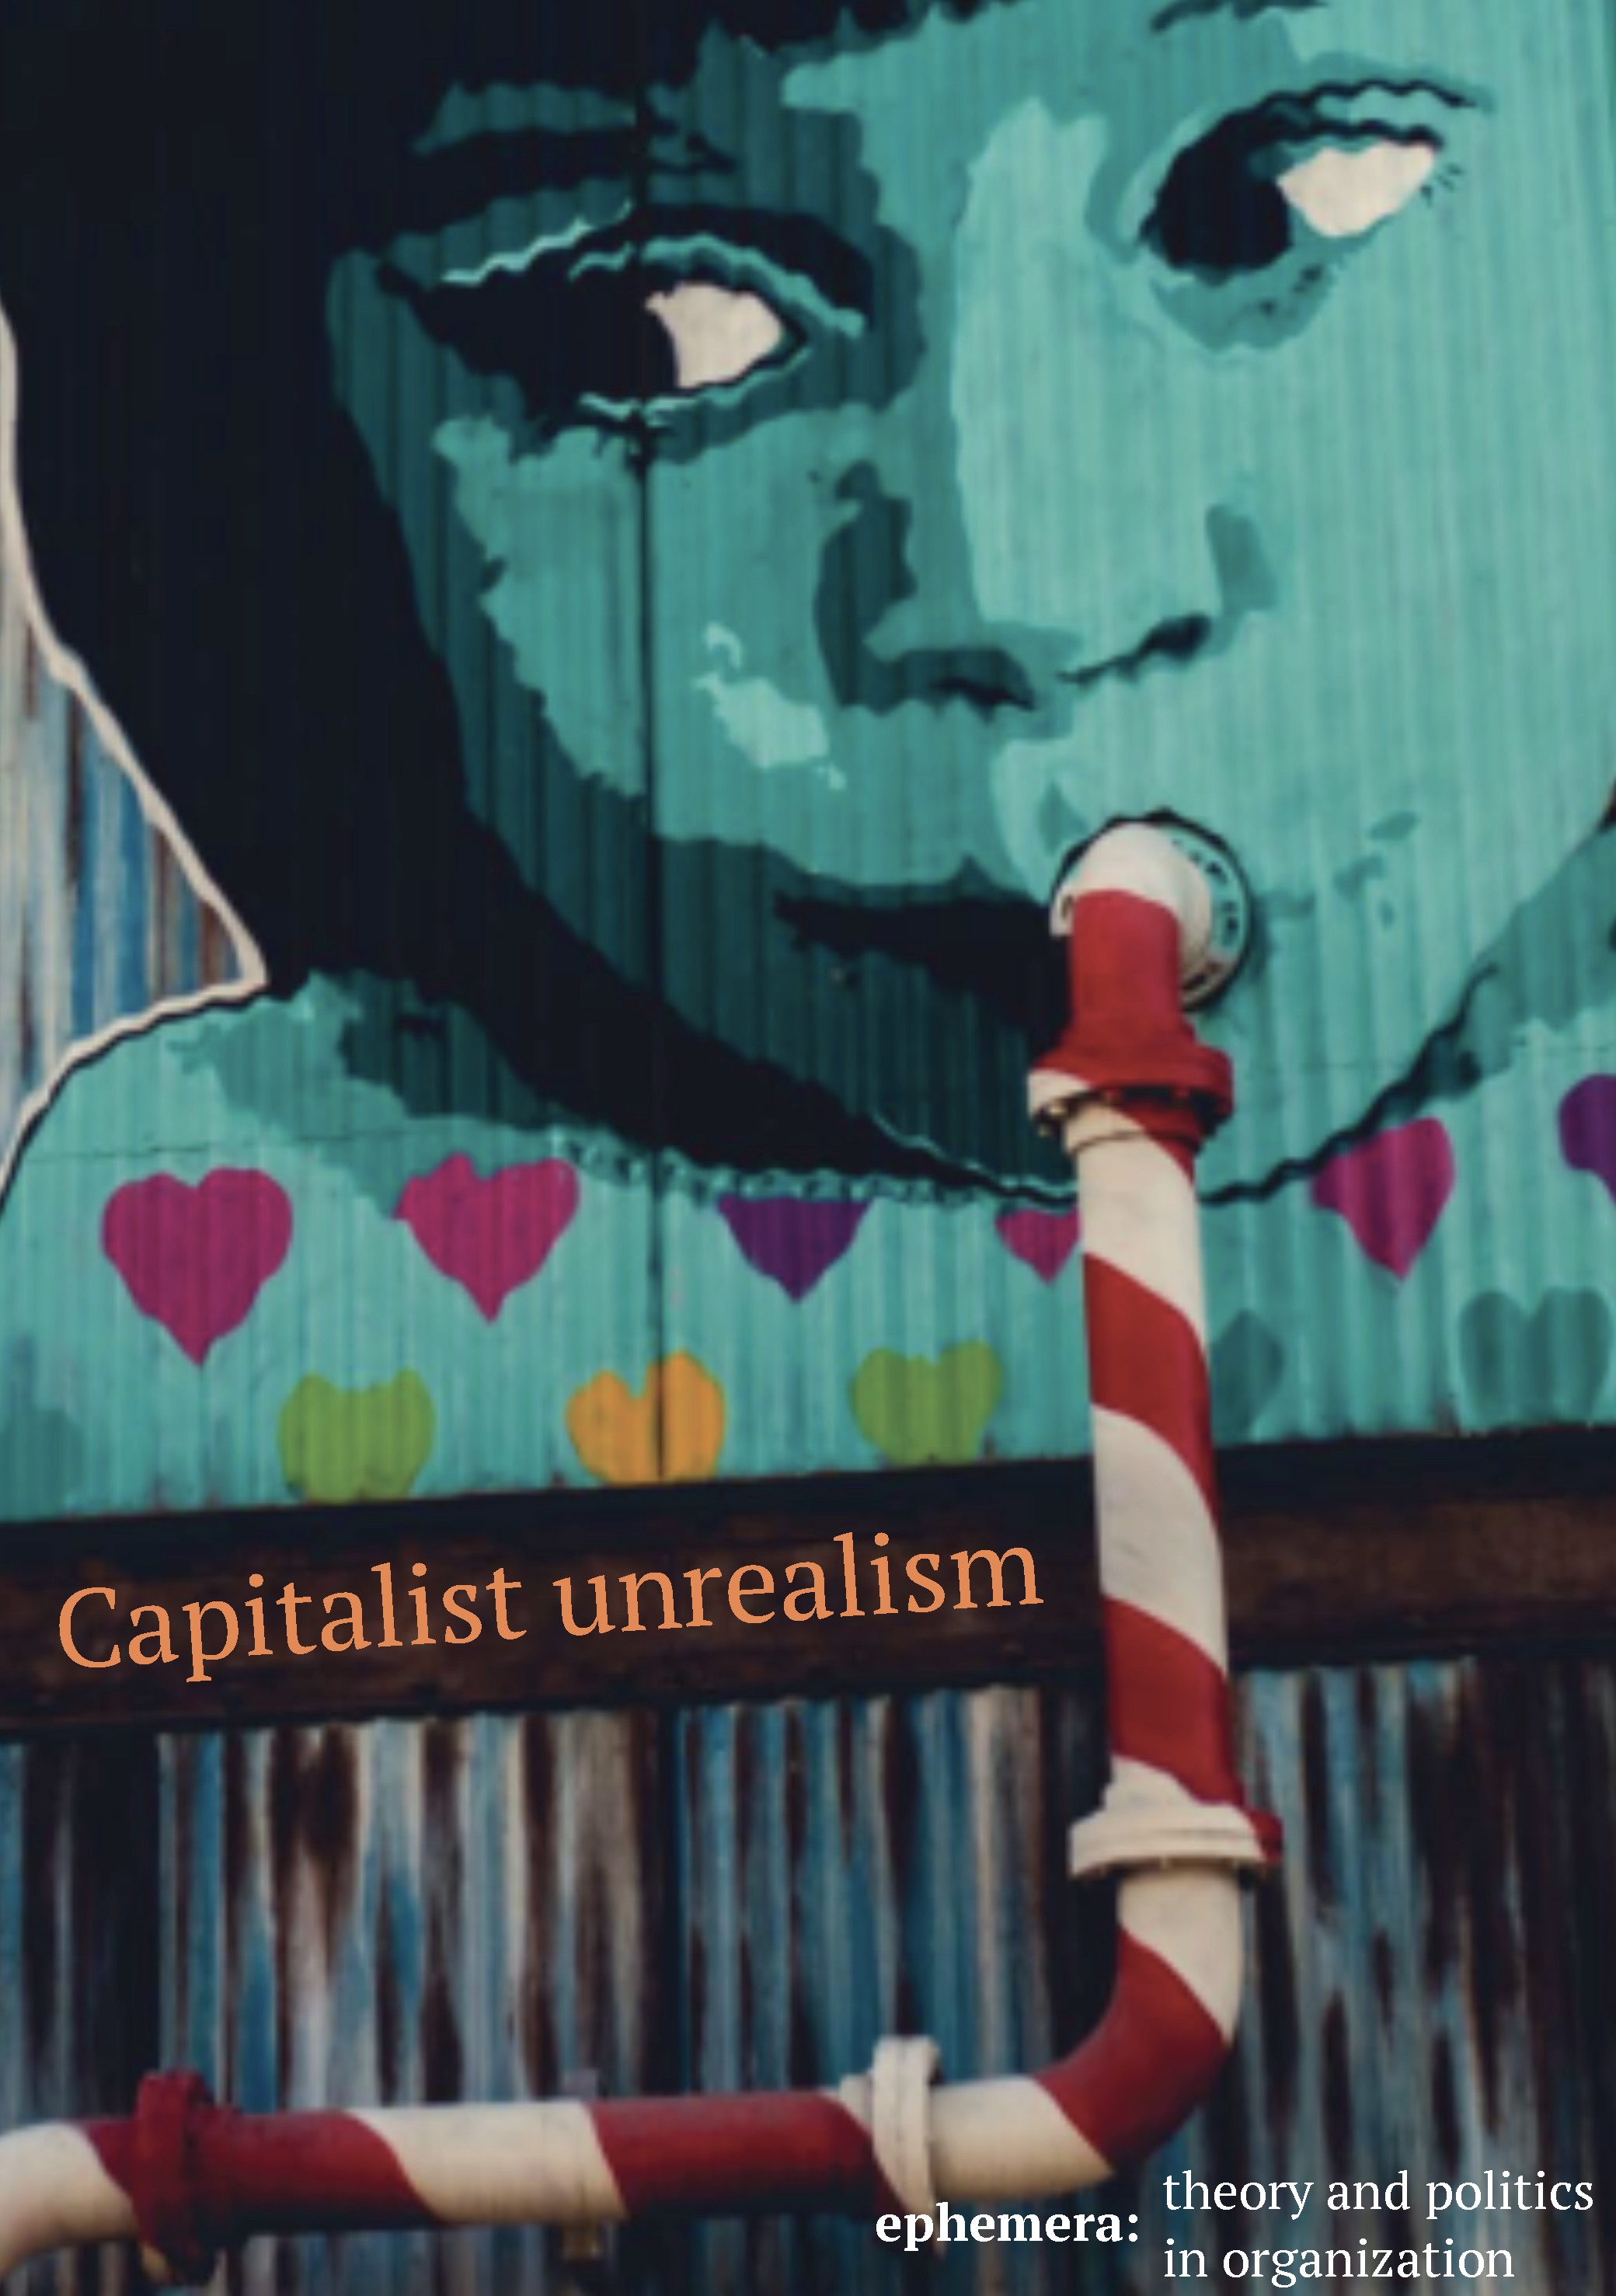 Capitalist unrealism